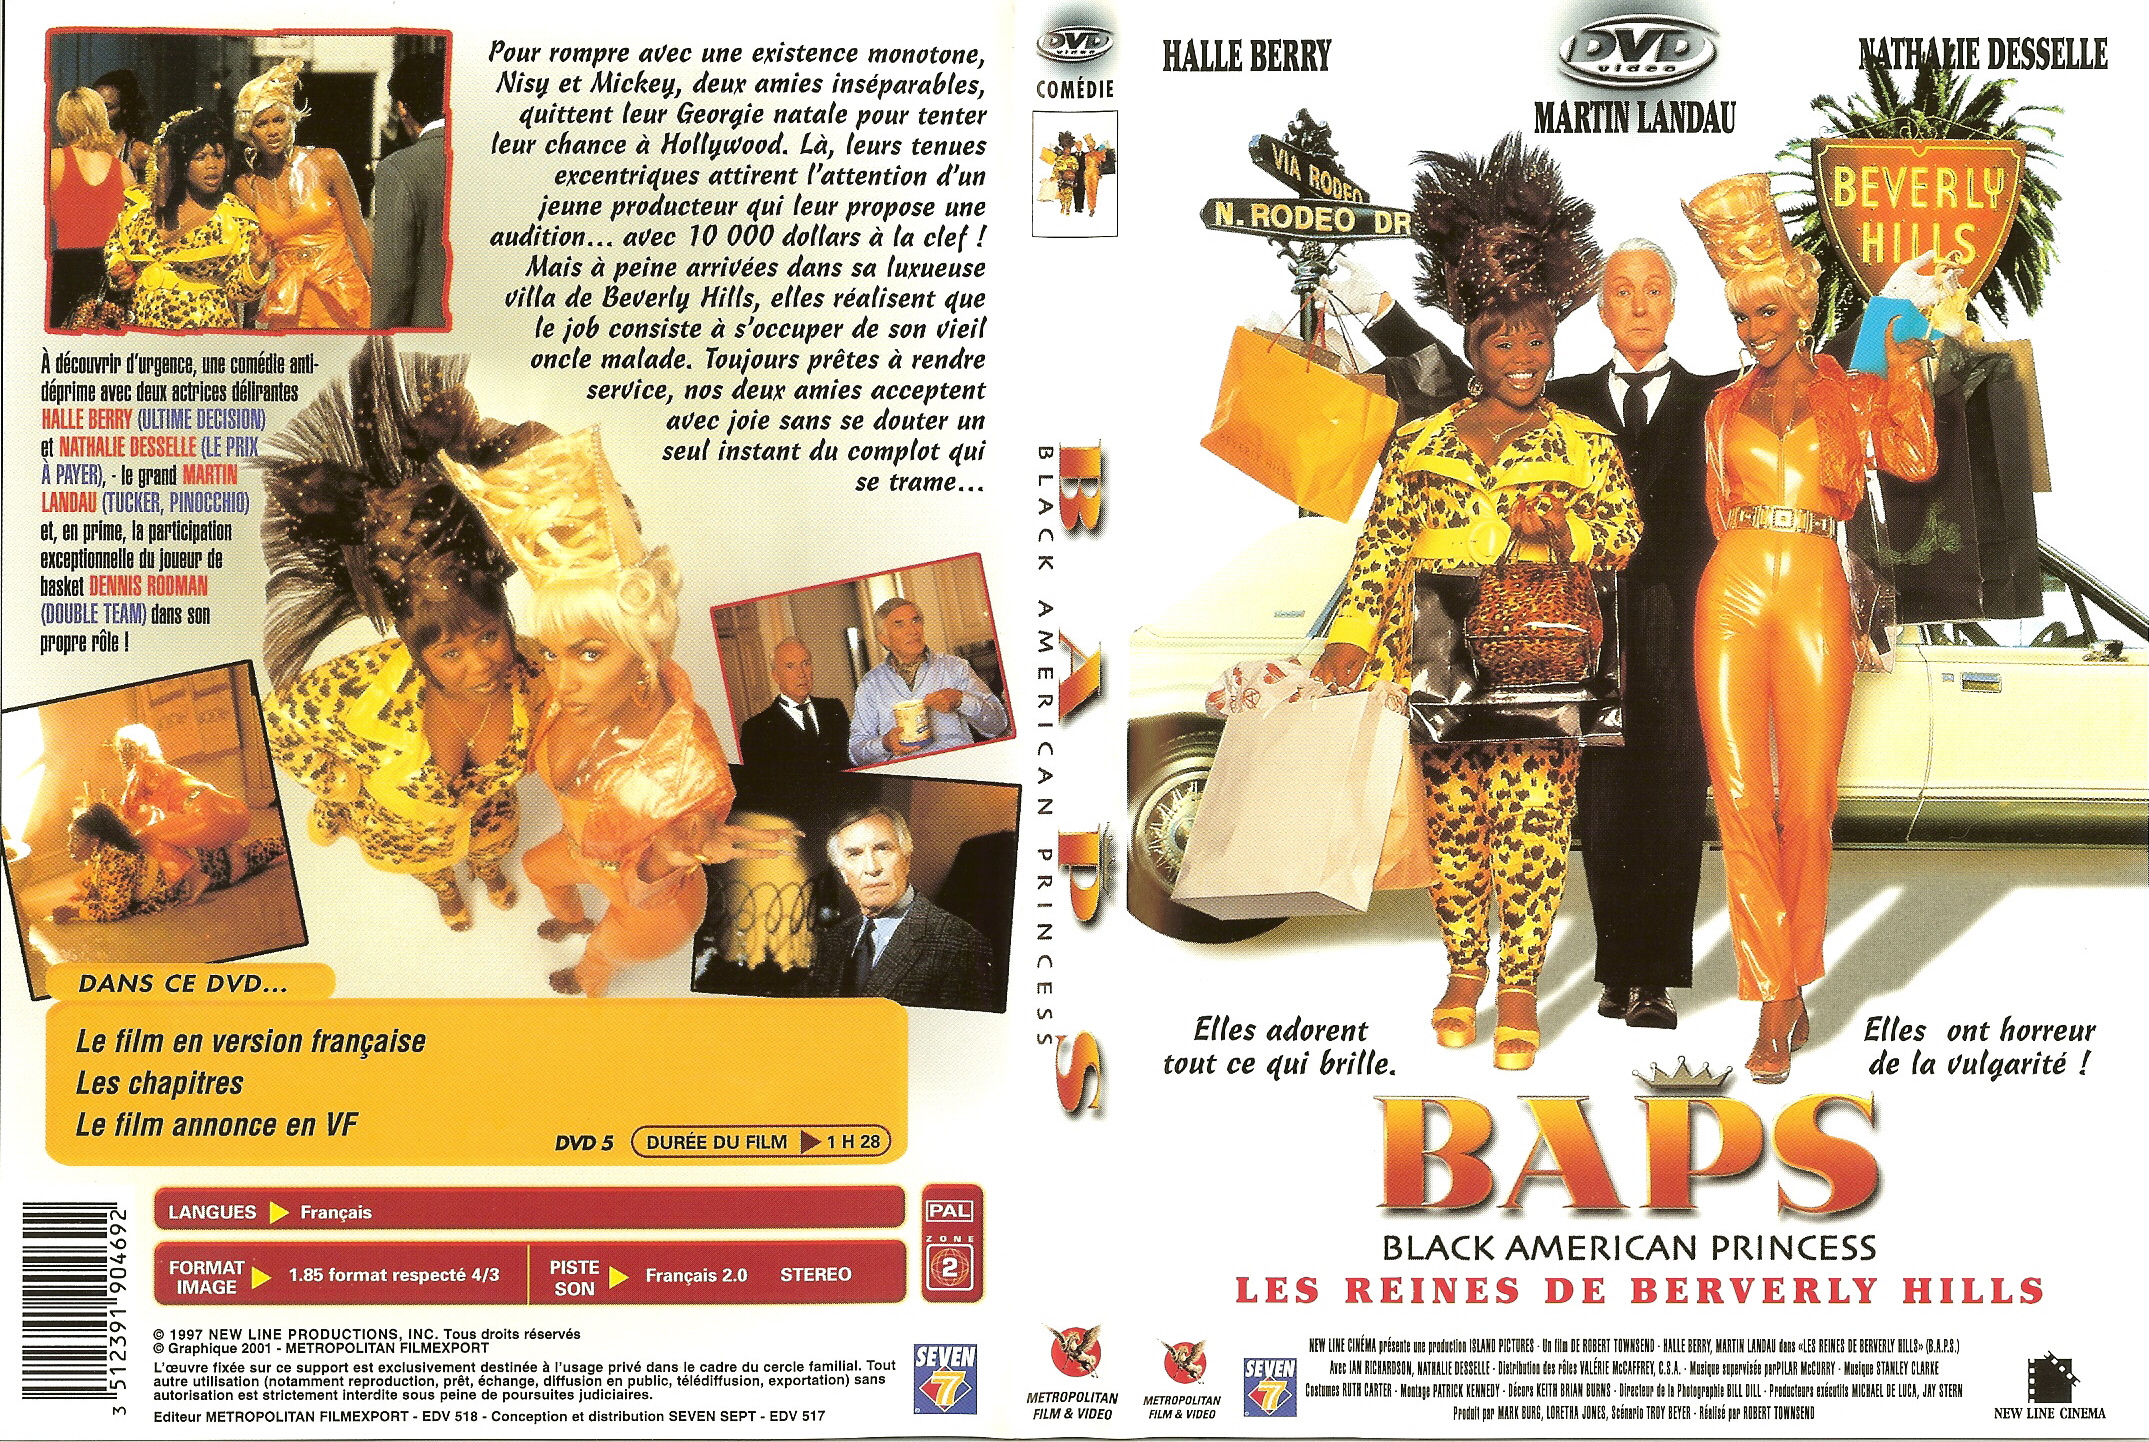 Jaquette DVD Baps Black American Princess